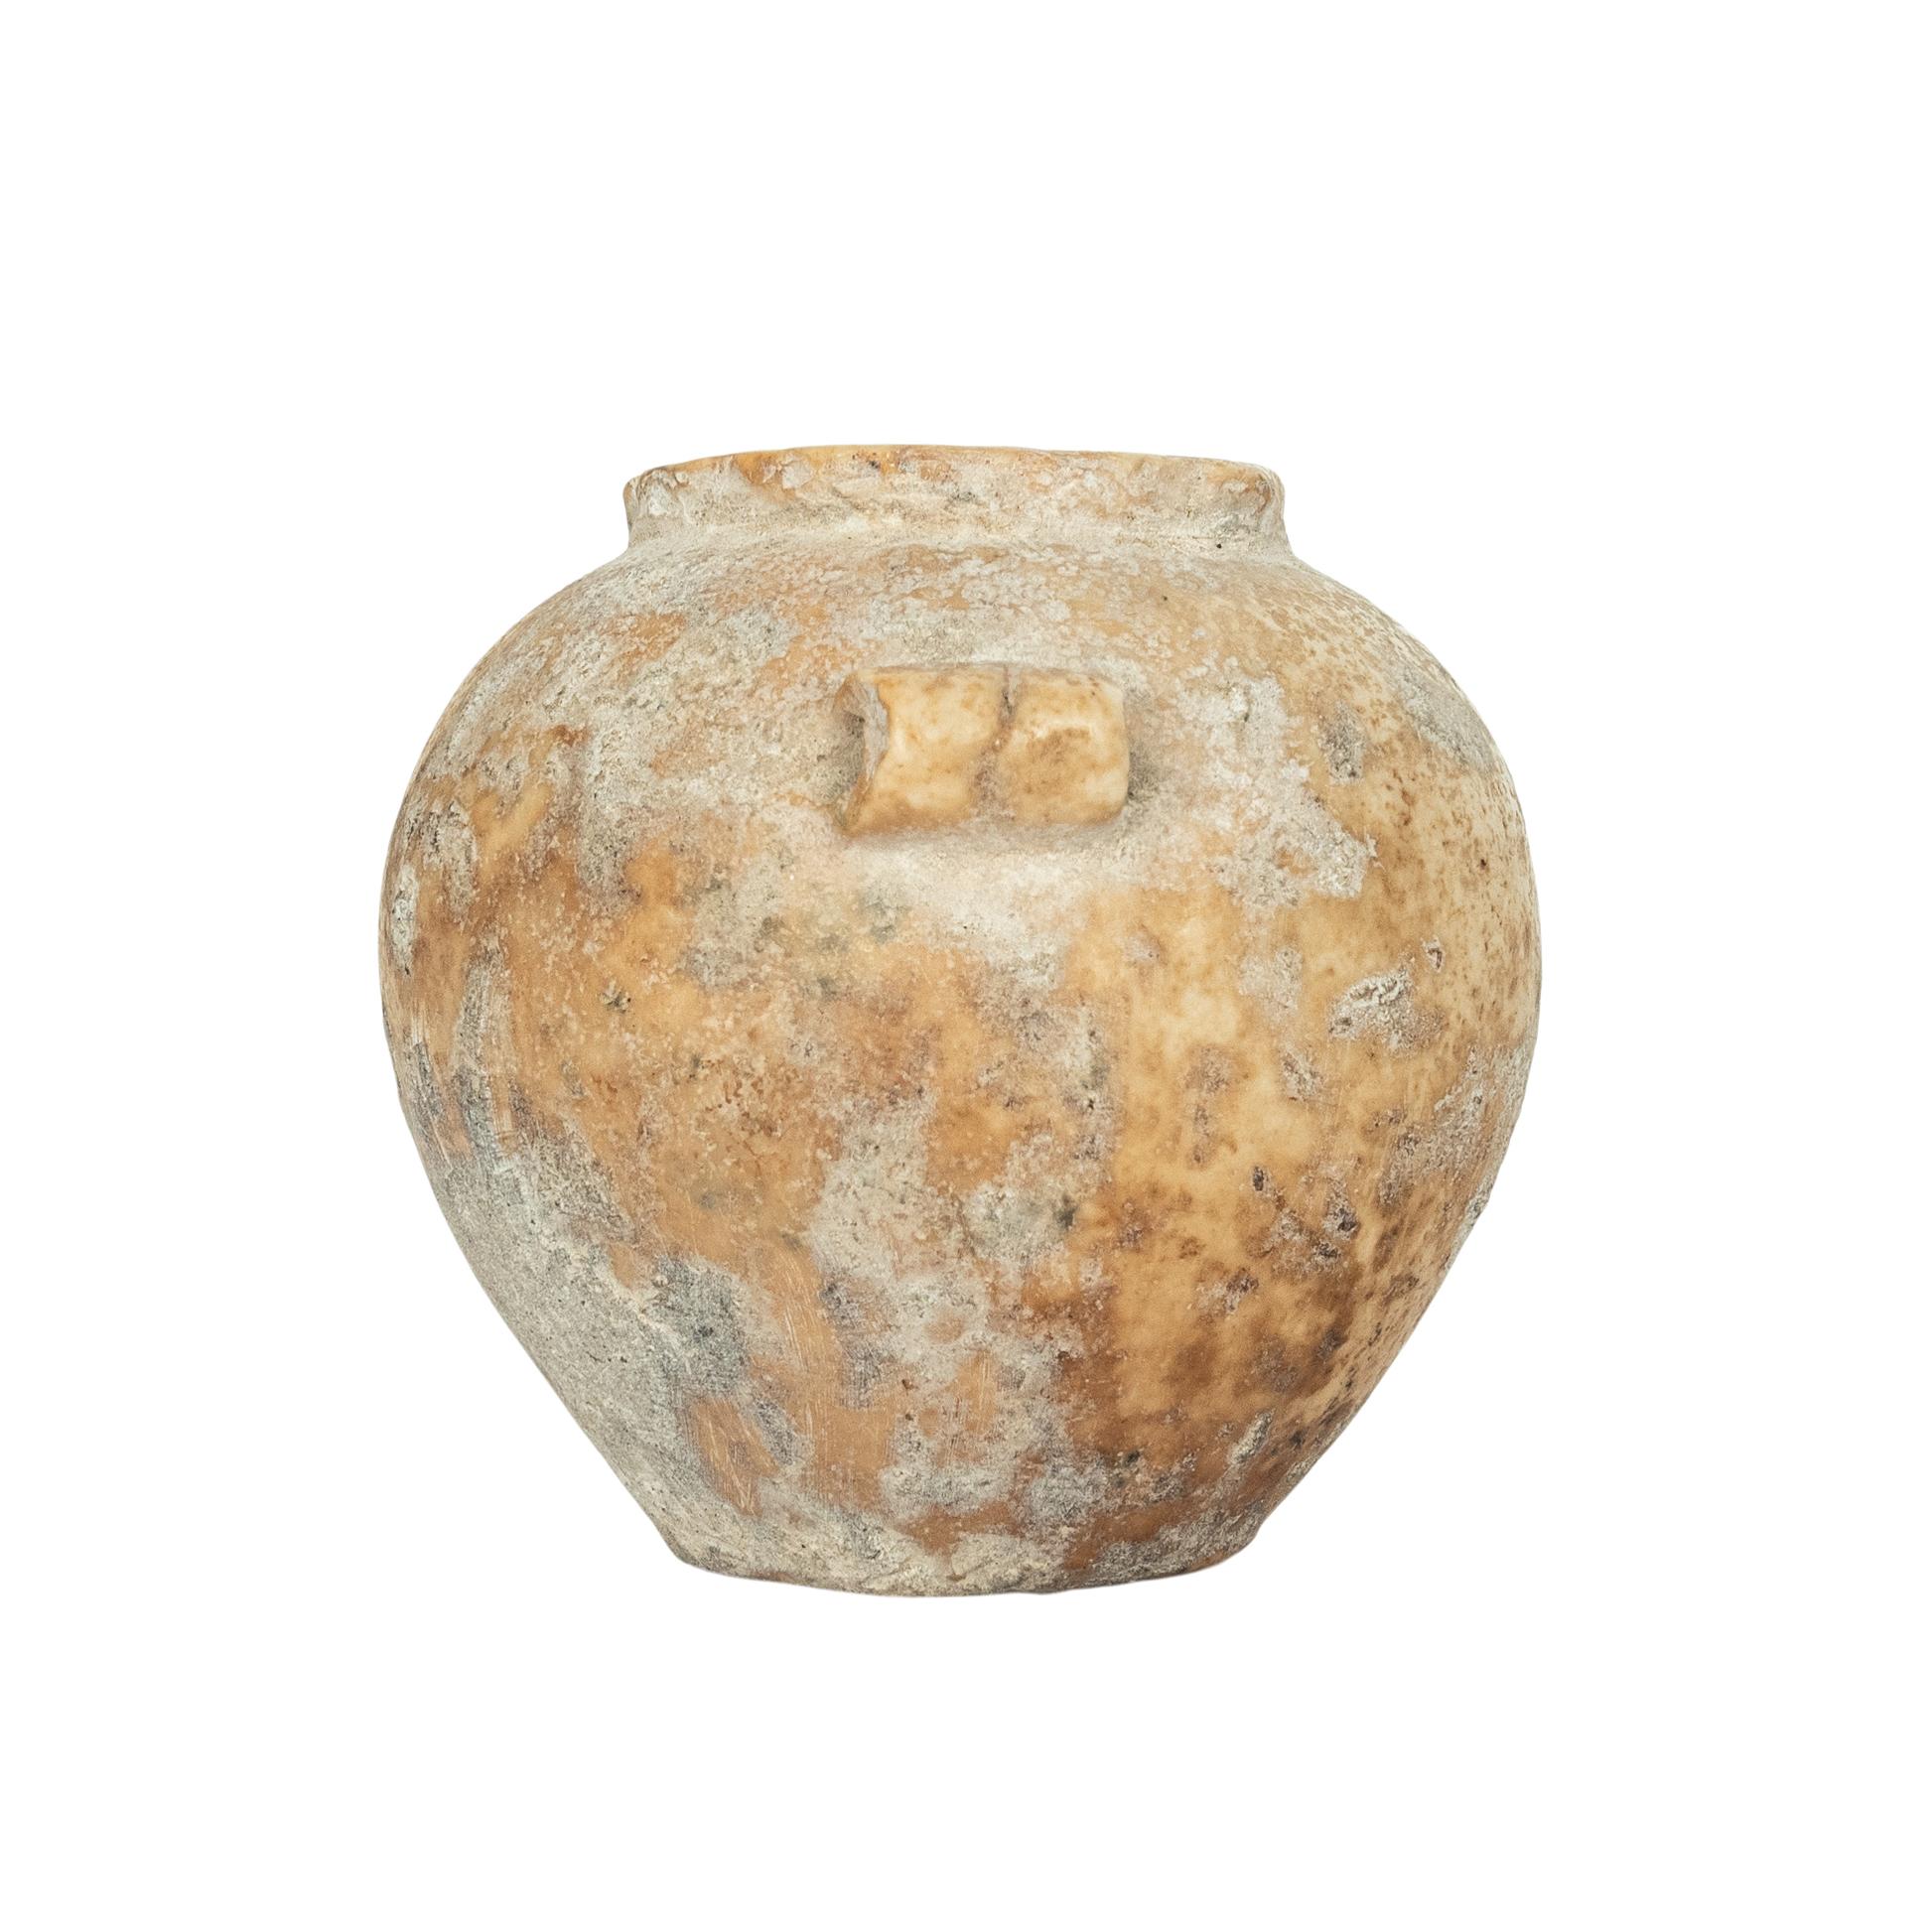 Pierre Ancienne Égypte Ancien Empire Miniature A Stone Vessel Jar 2600-2800 BCE